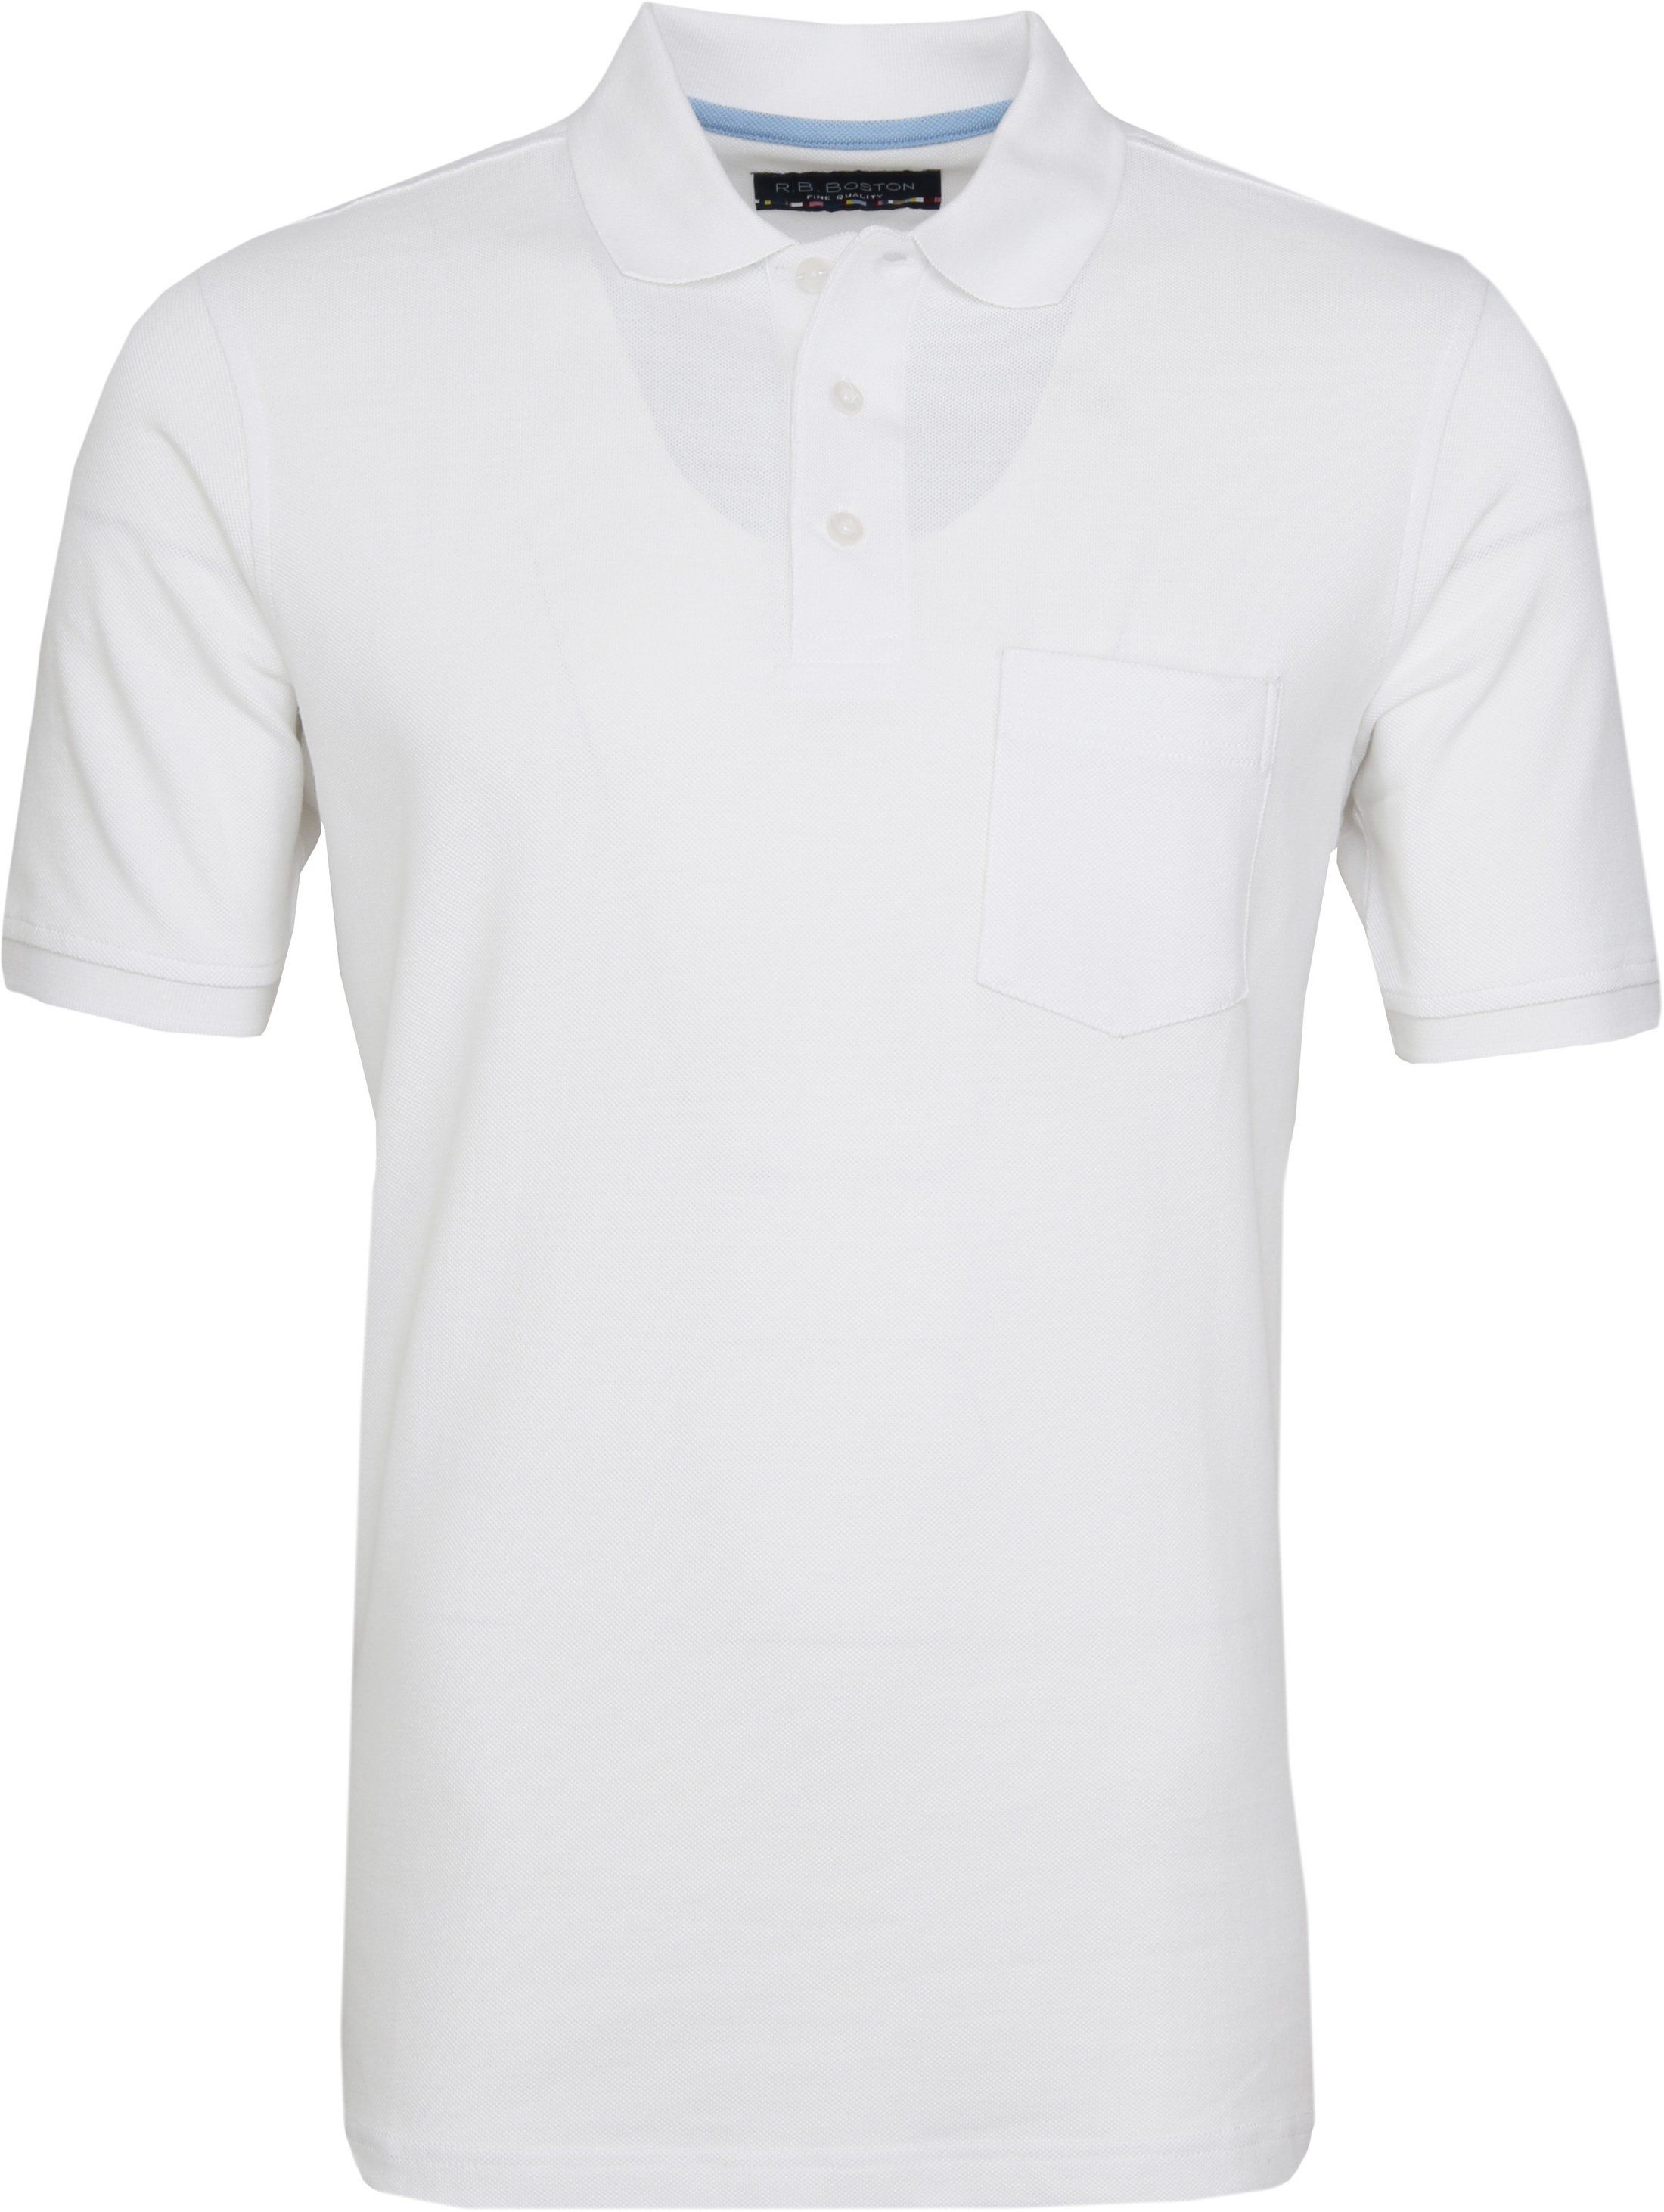 Suitable Polo Shirt Boston White size L